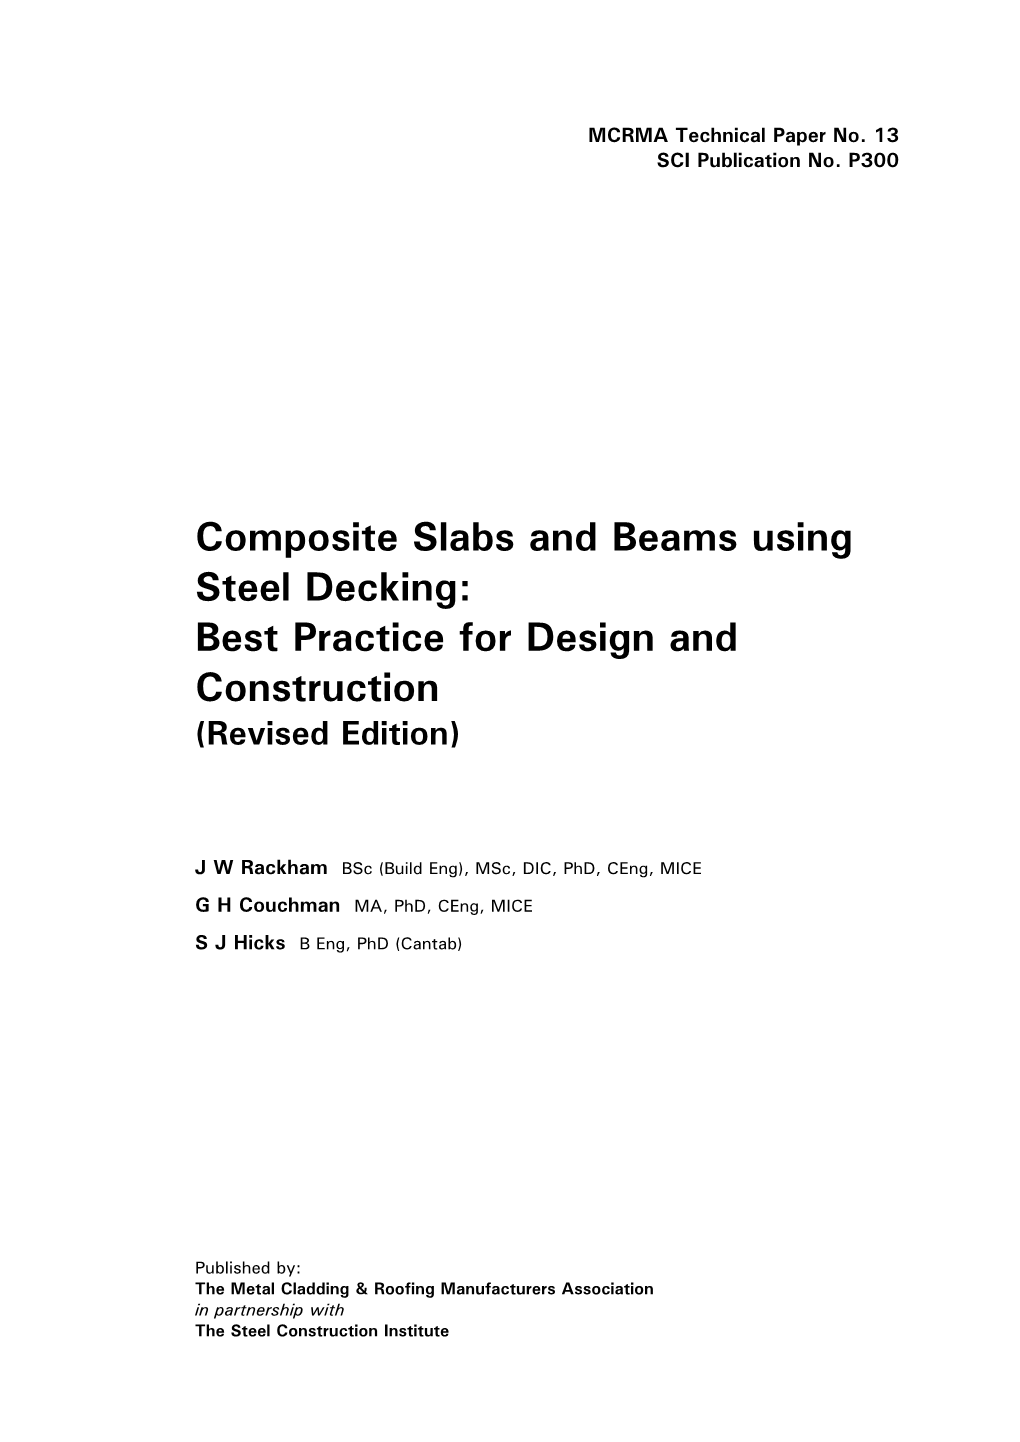 SCI P300, Composite Slabs and Beams Using Steel Decking: Best